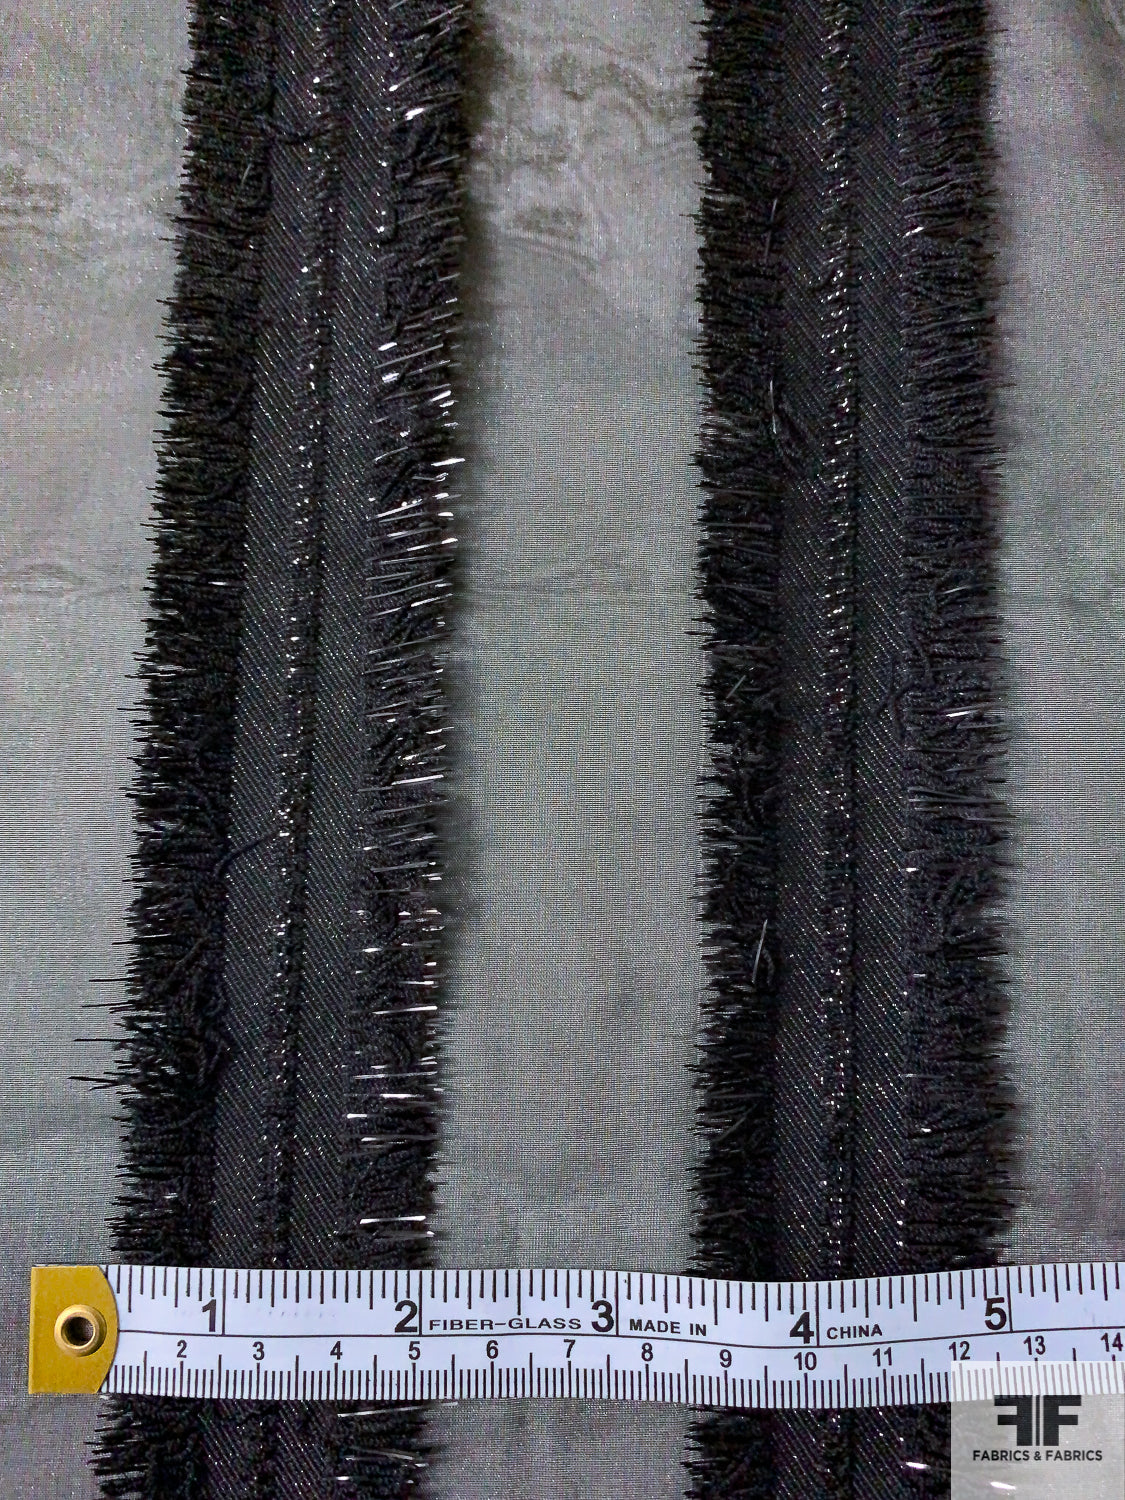 Vertical Eyelash Striped Novelty Organza - Black